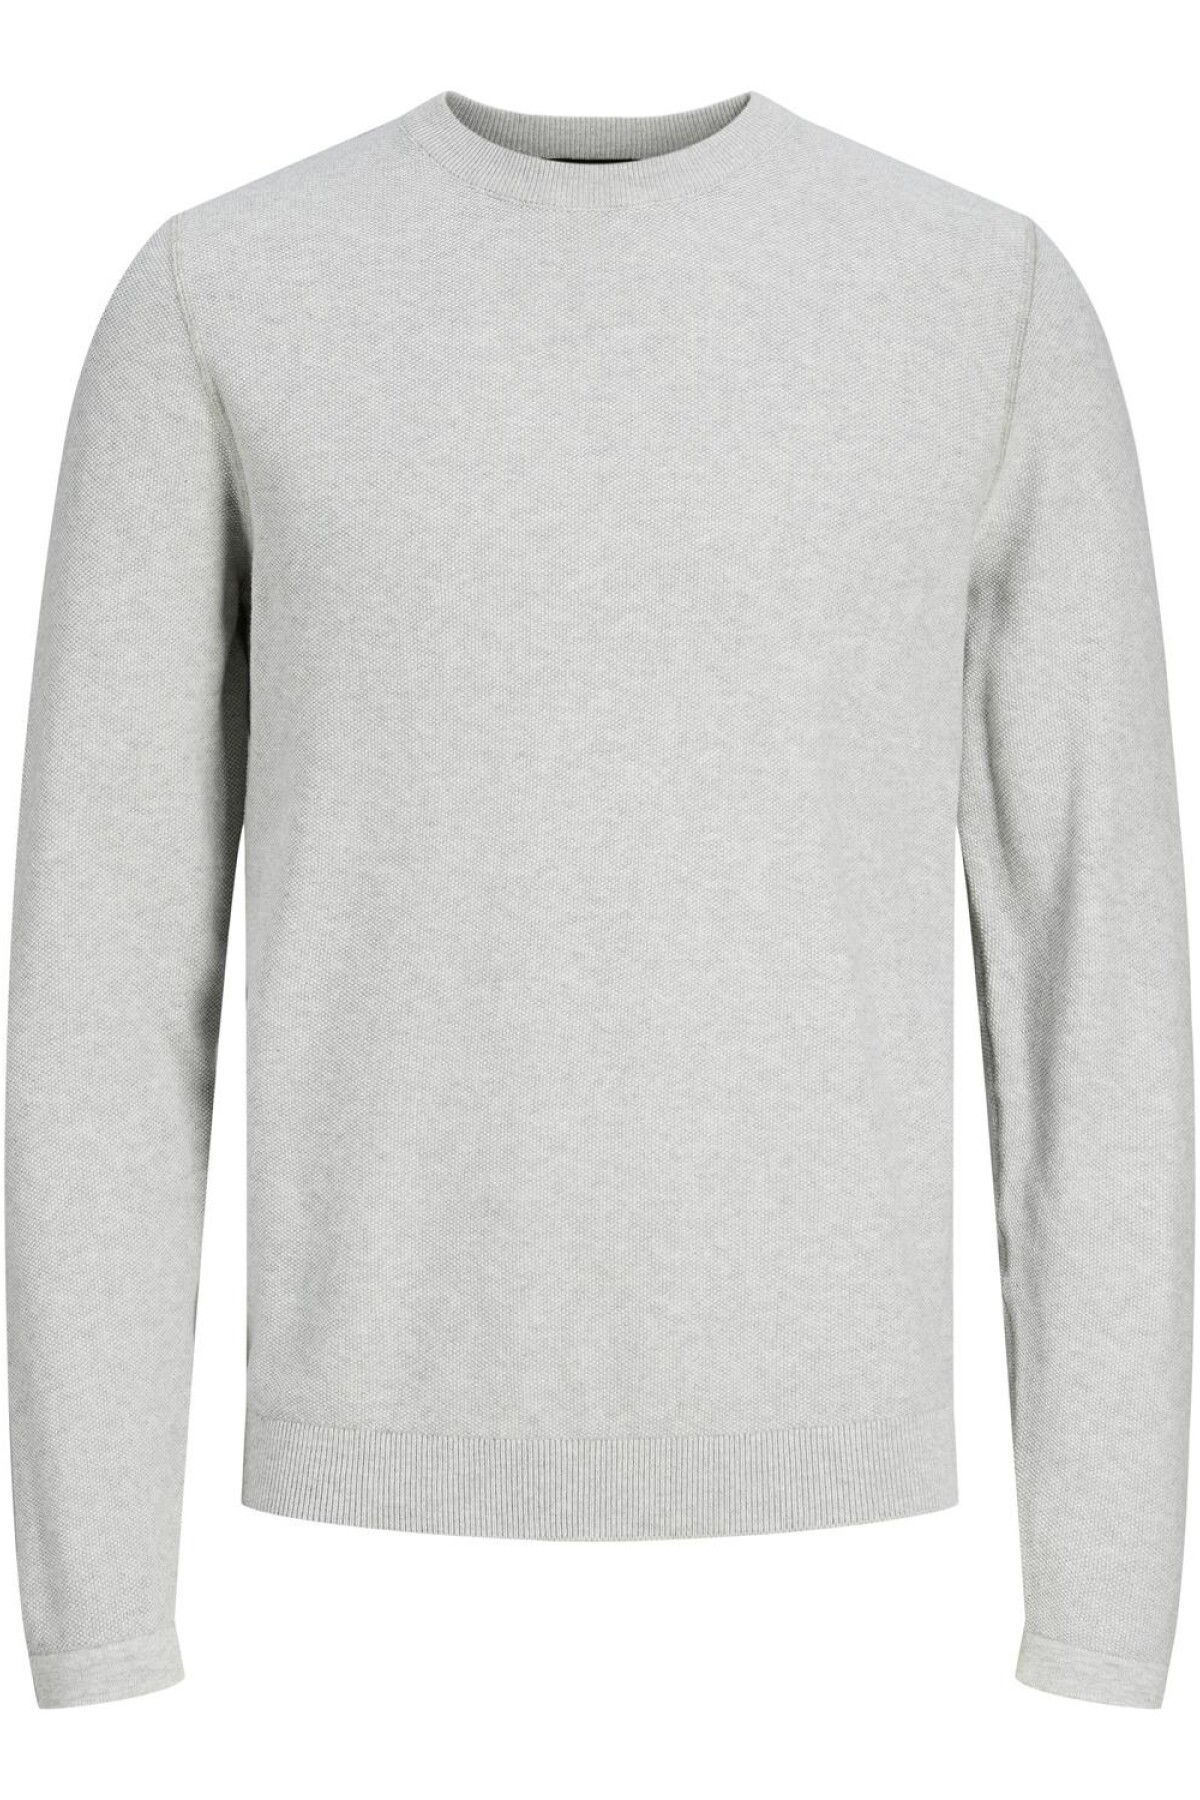 Sweater Blatom Basico Cool Grey